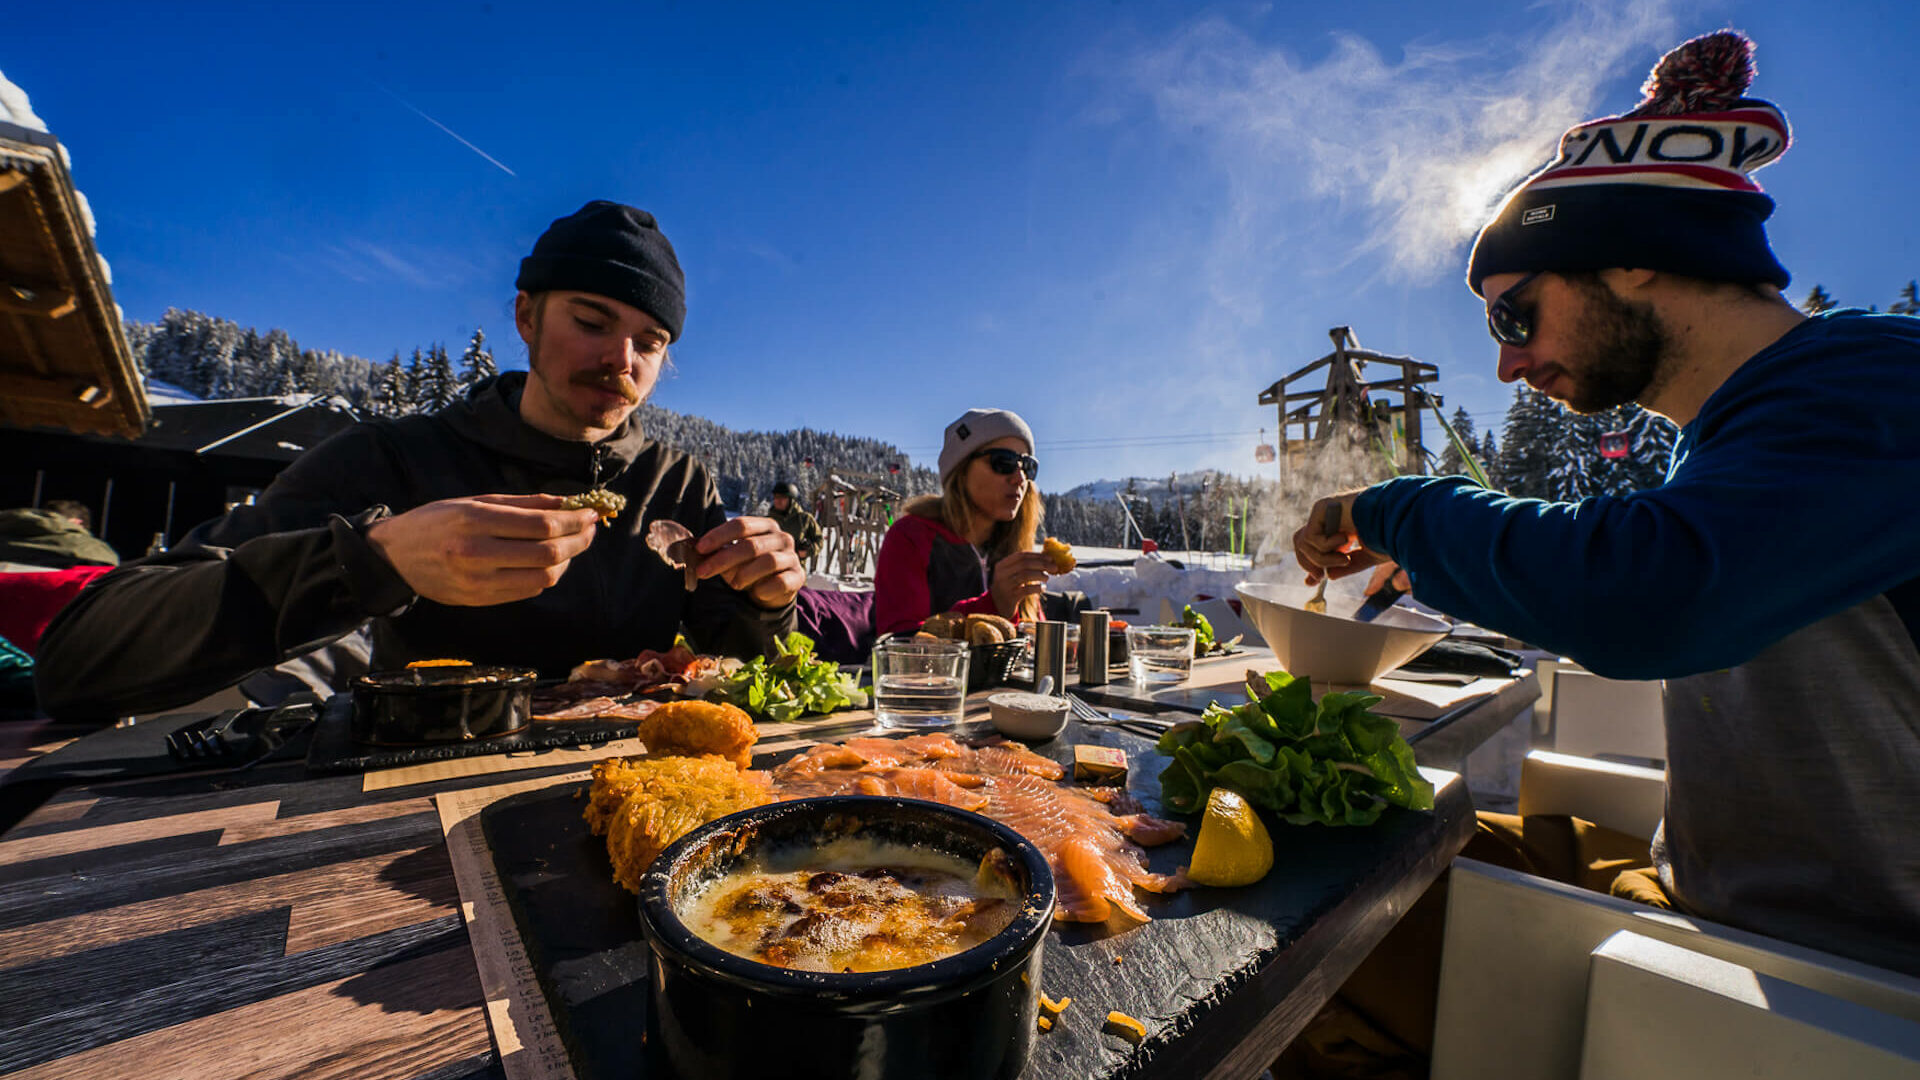 Amis prenant un repas au restaurant en terrasse en hiver